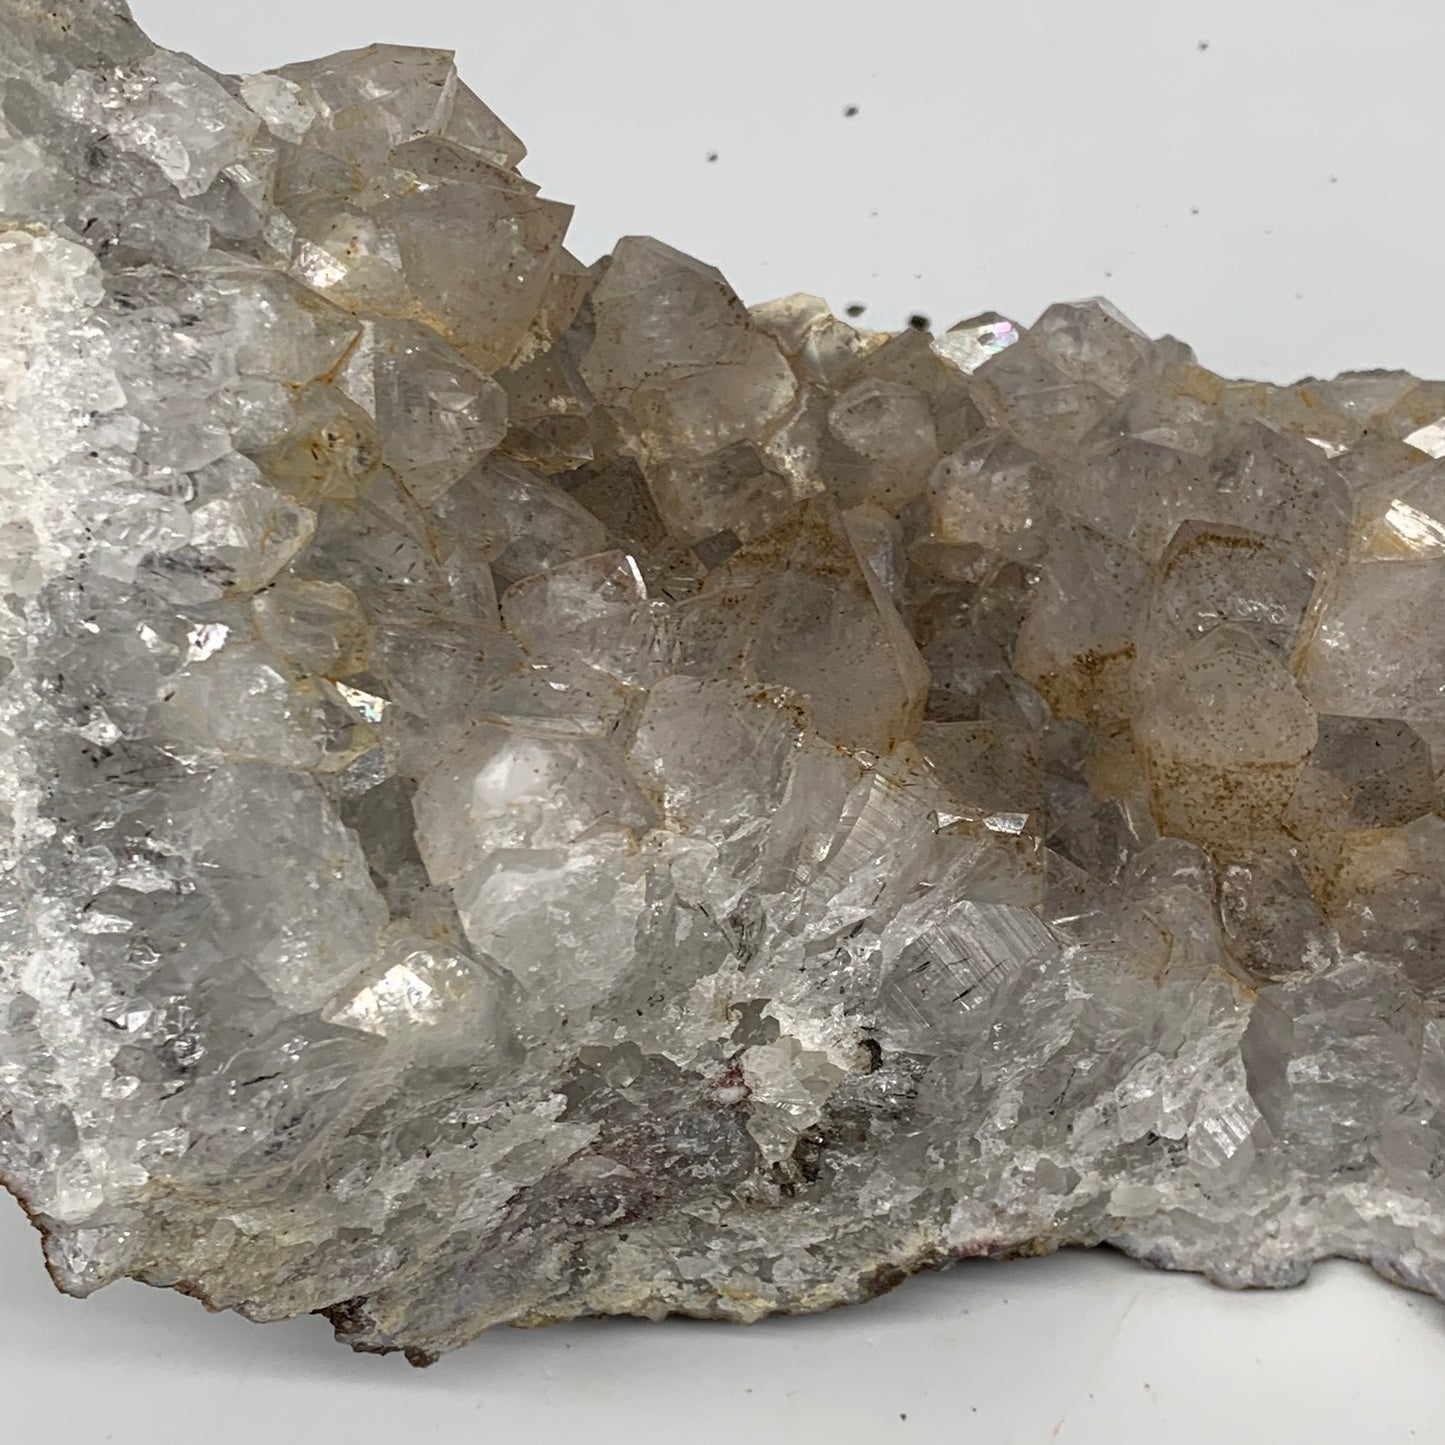 2940g, 8.5"x4.5"x3", Rare Manganese Cluster With Quartz Mineral Specimen,B11049